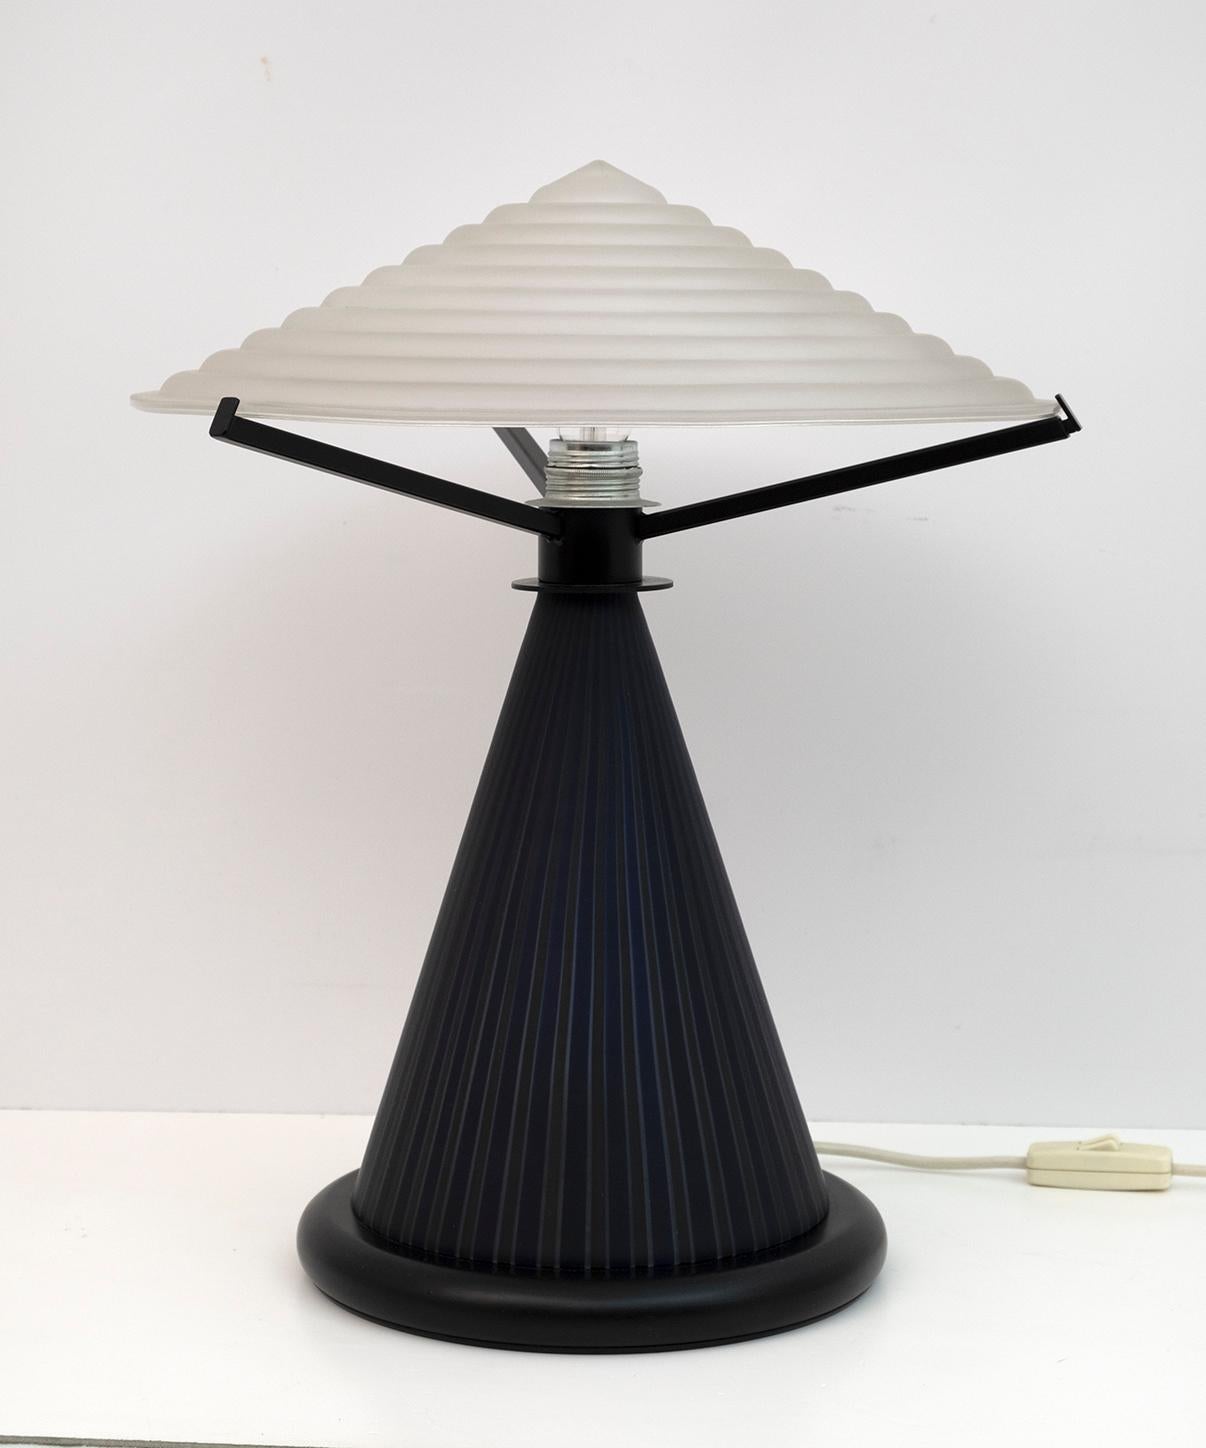 Pair of Post Modern Italian Murano Glass Mushroom Table Lamps, 1980s For Sale 1